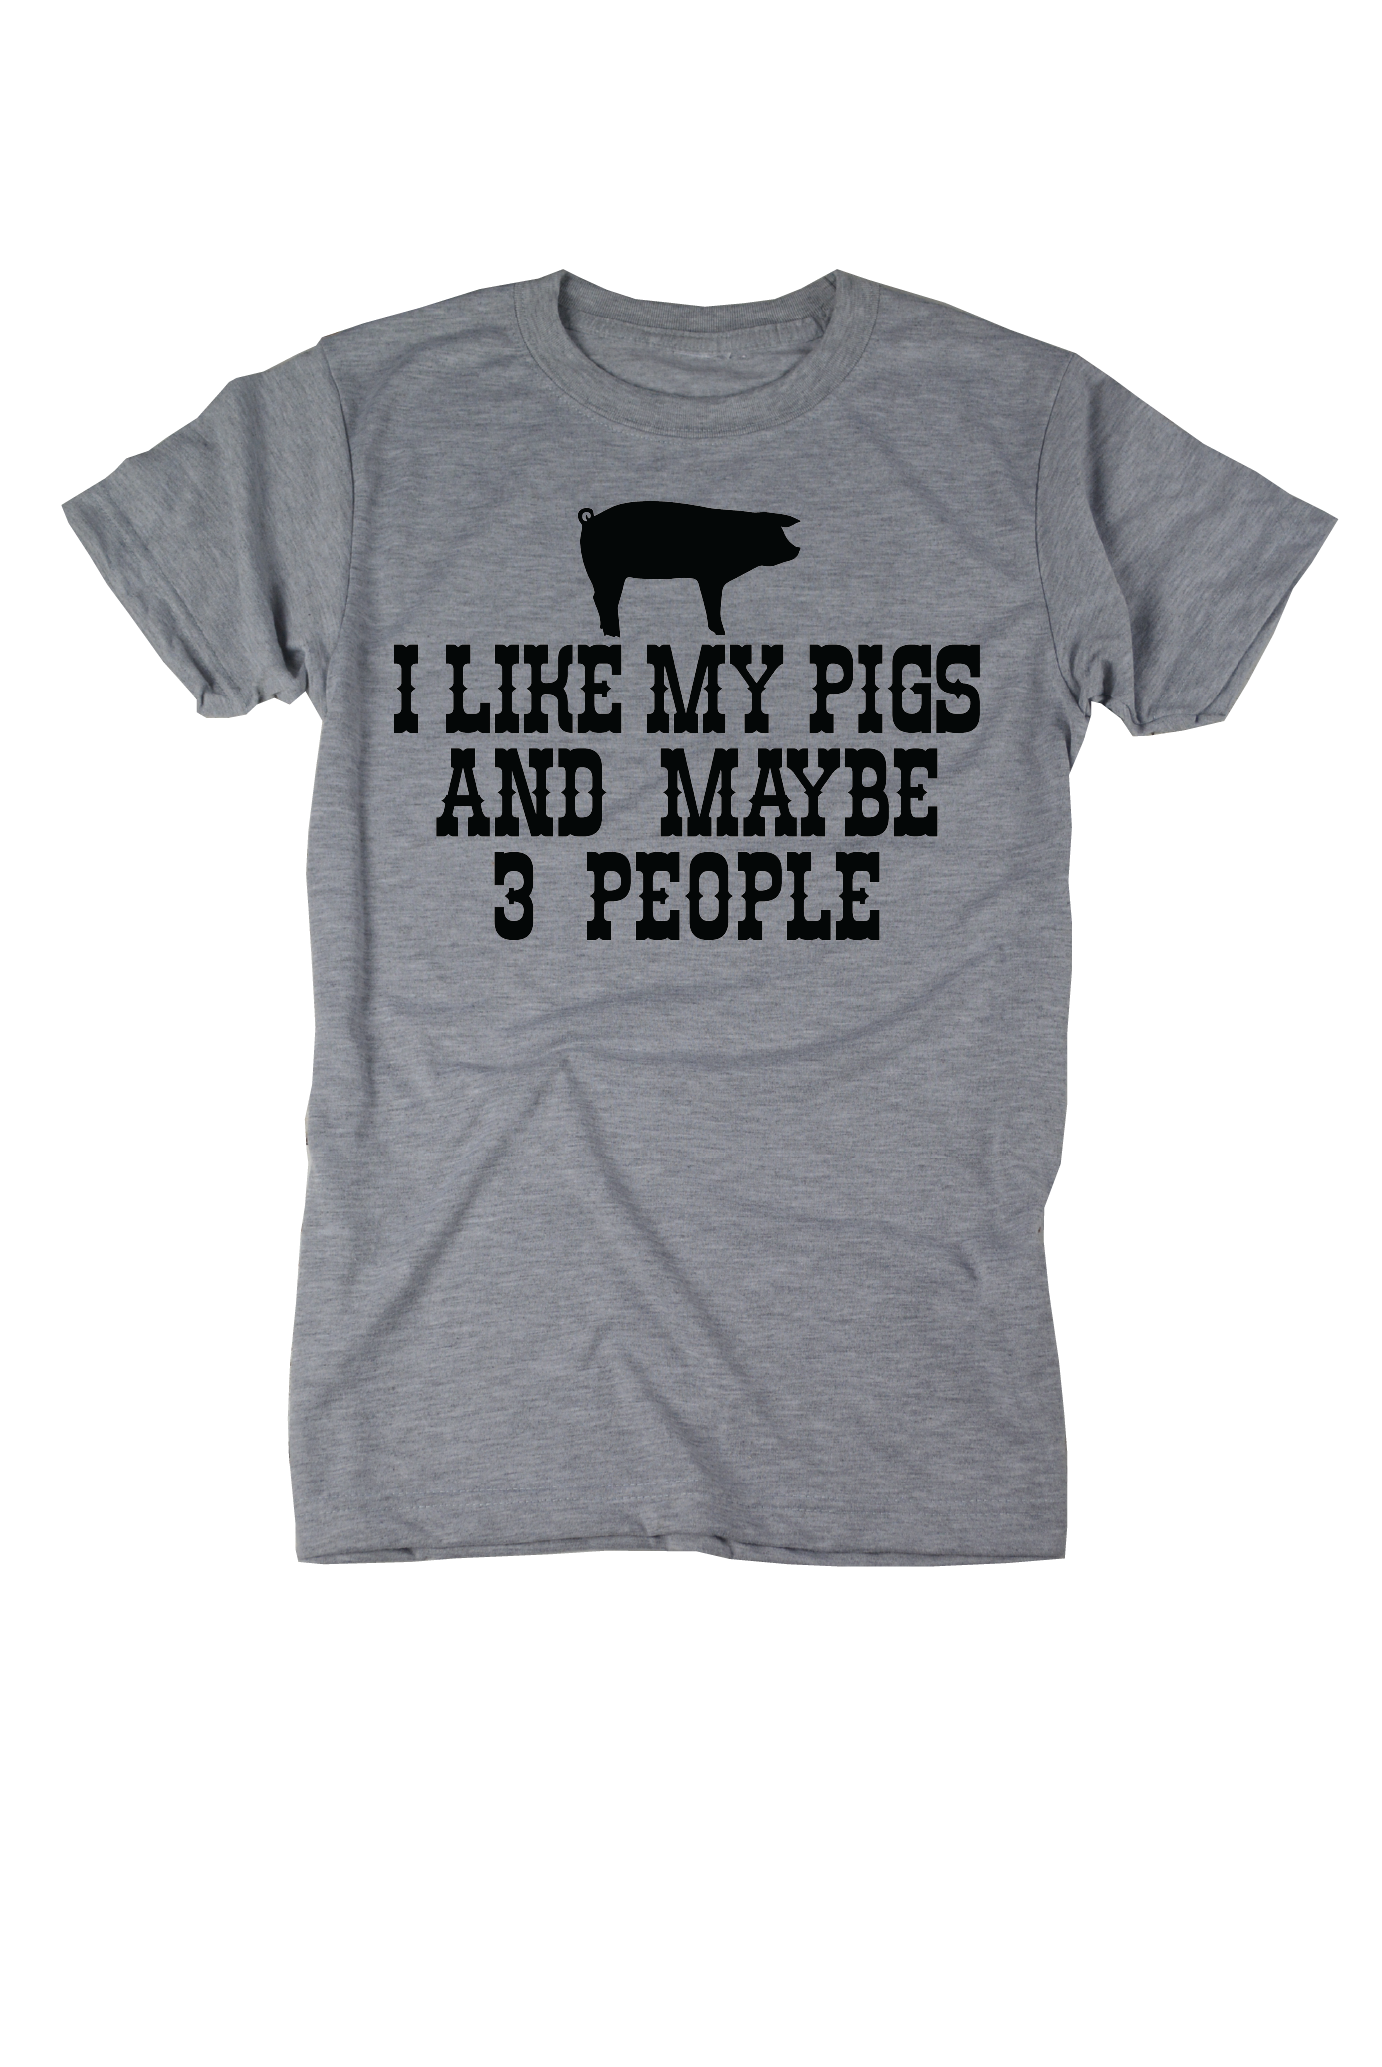 Because I like my Pigs